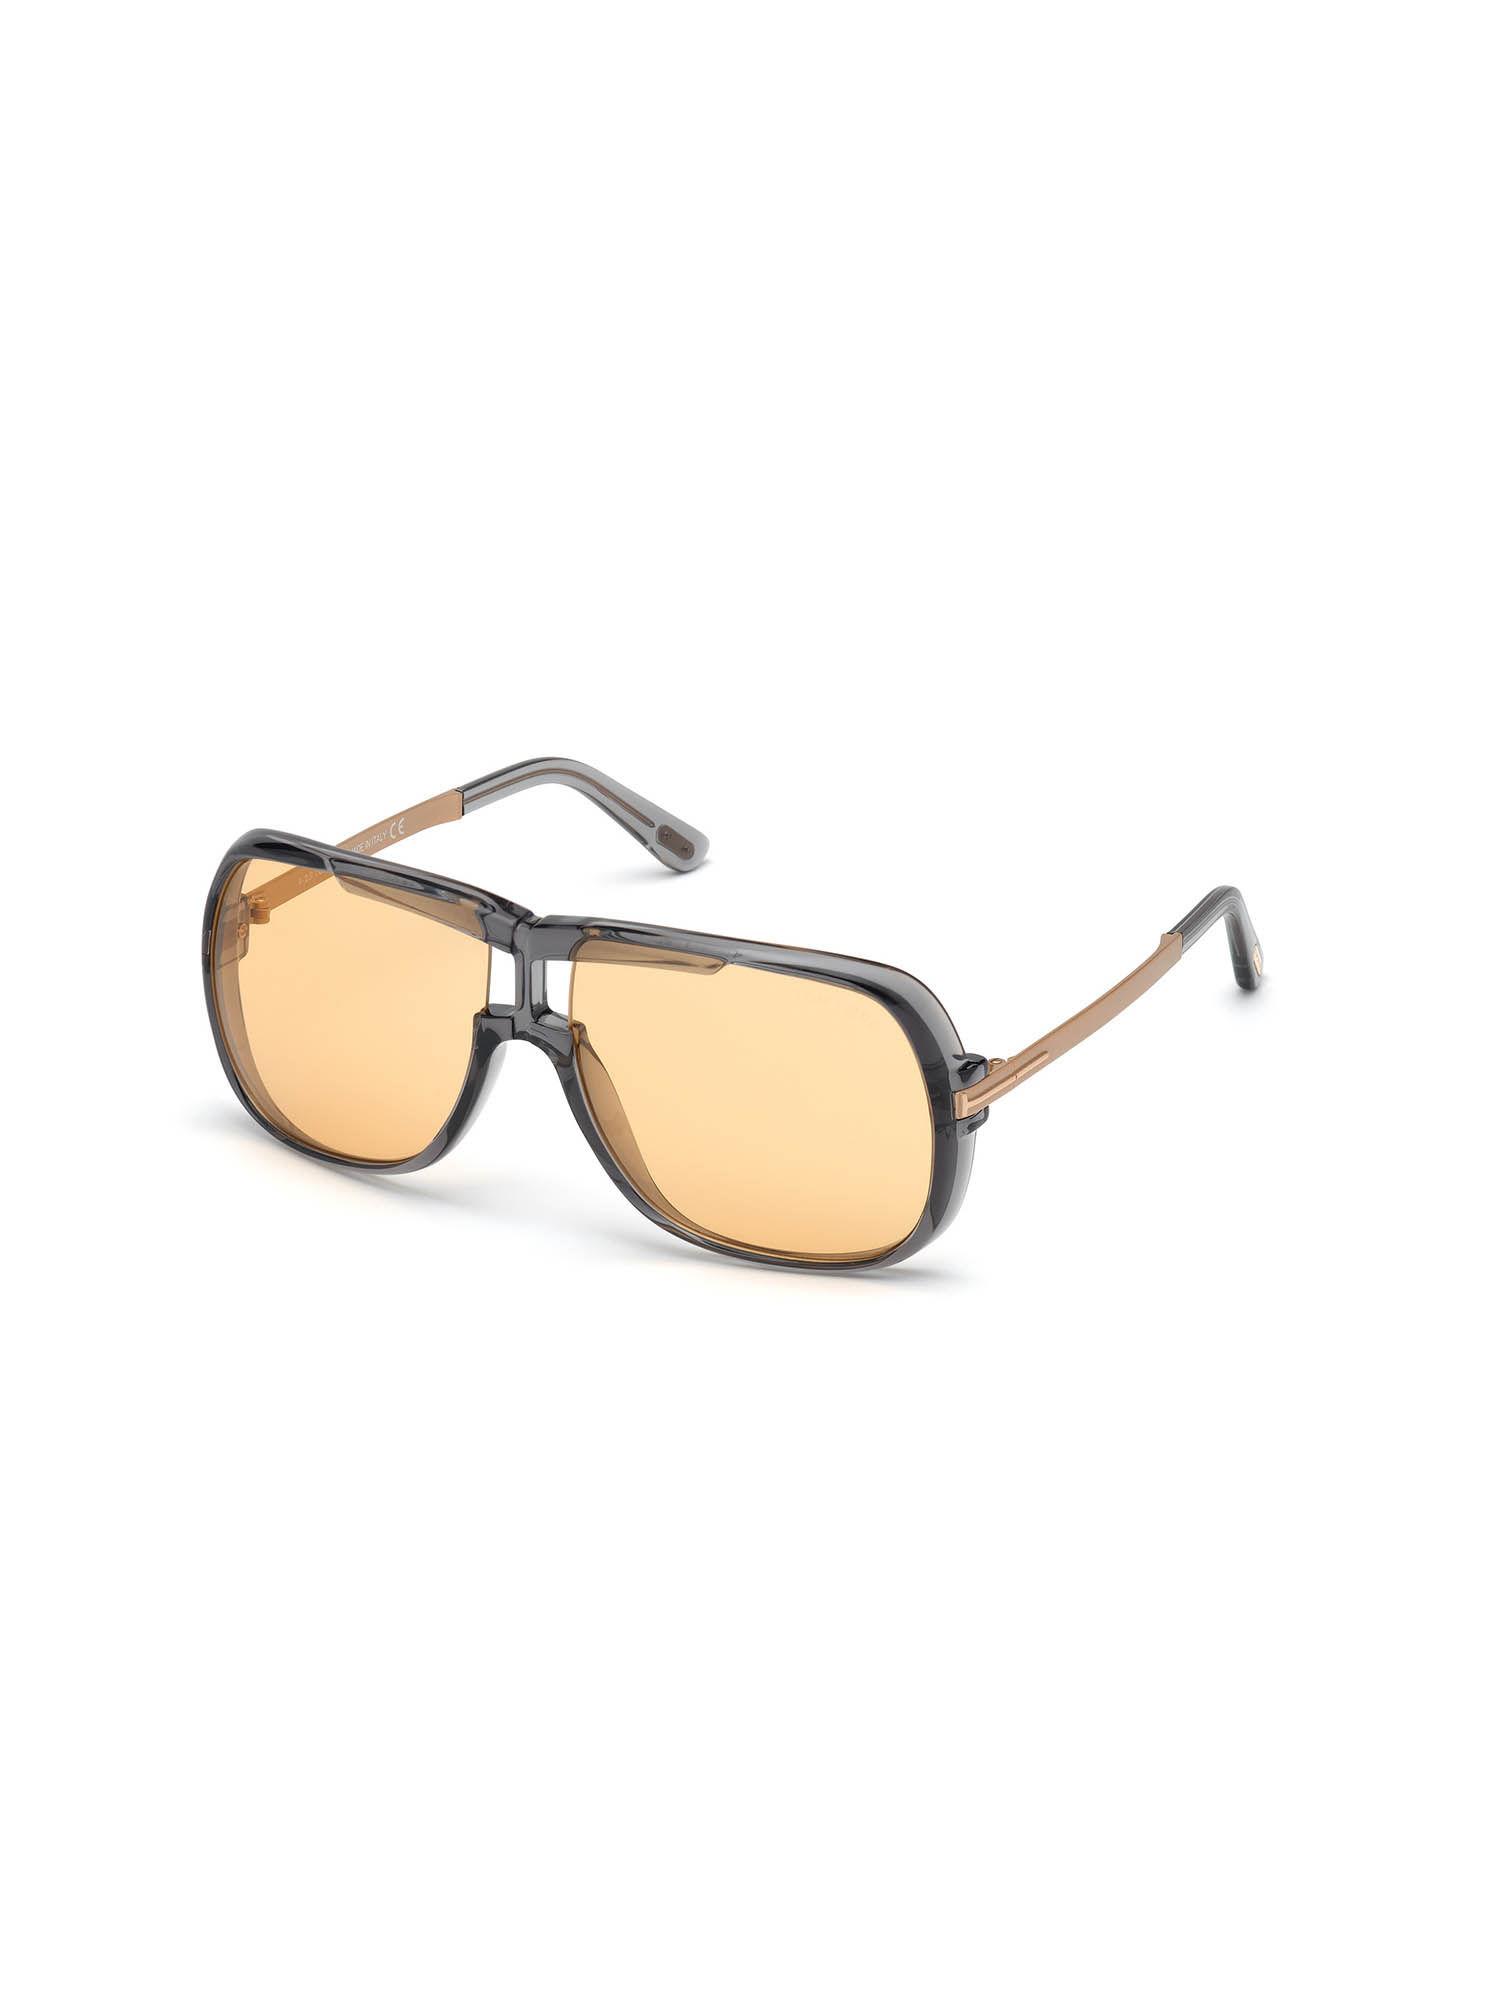 grey plastic sunglasses ft0800 62 20e